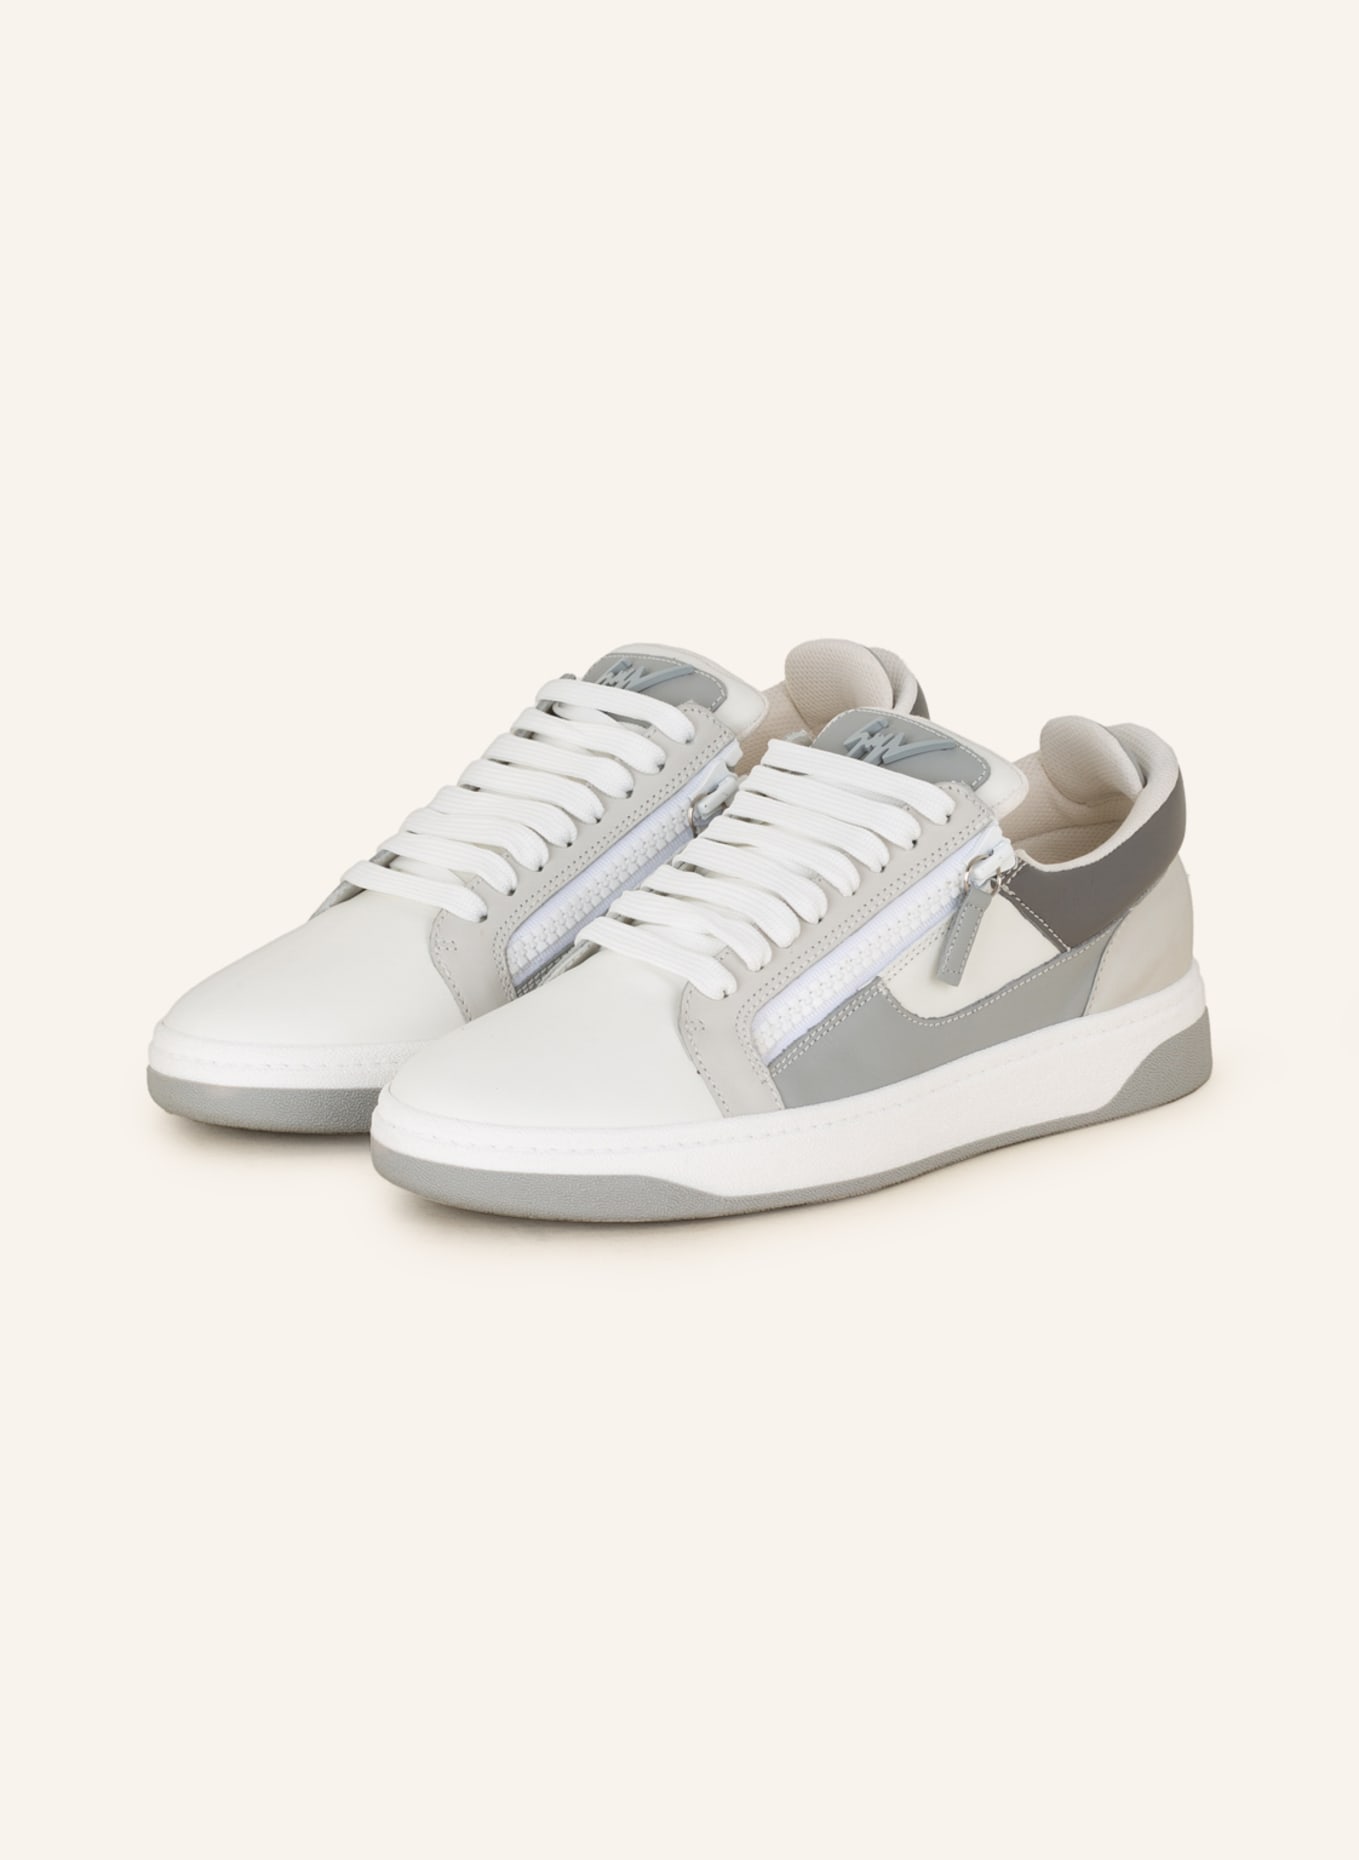 DESIGN Sneakers in white/ gray